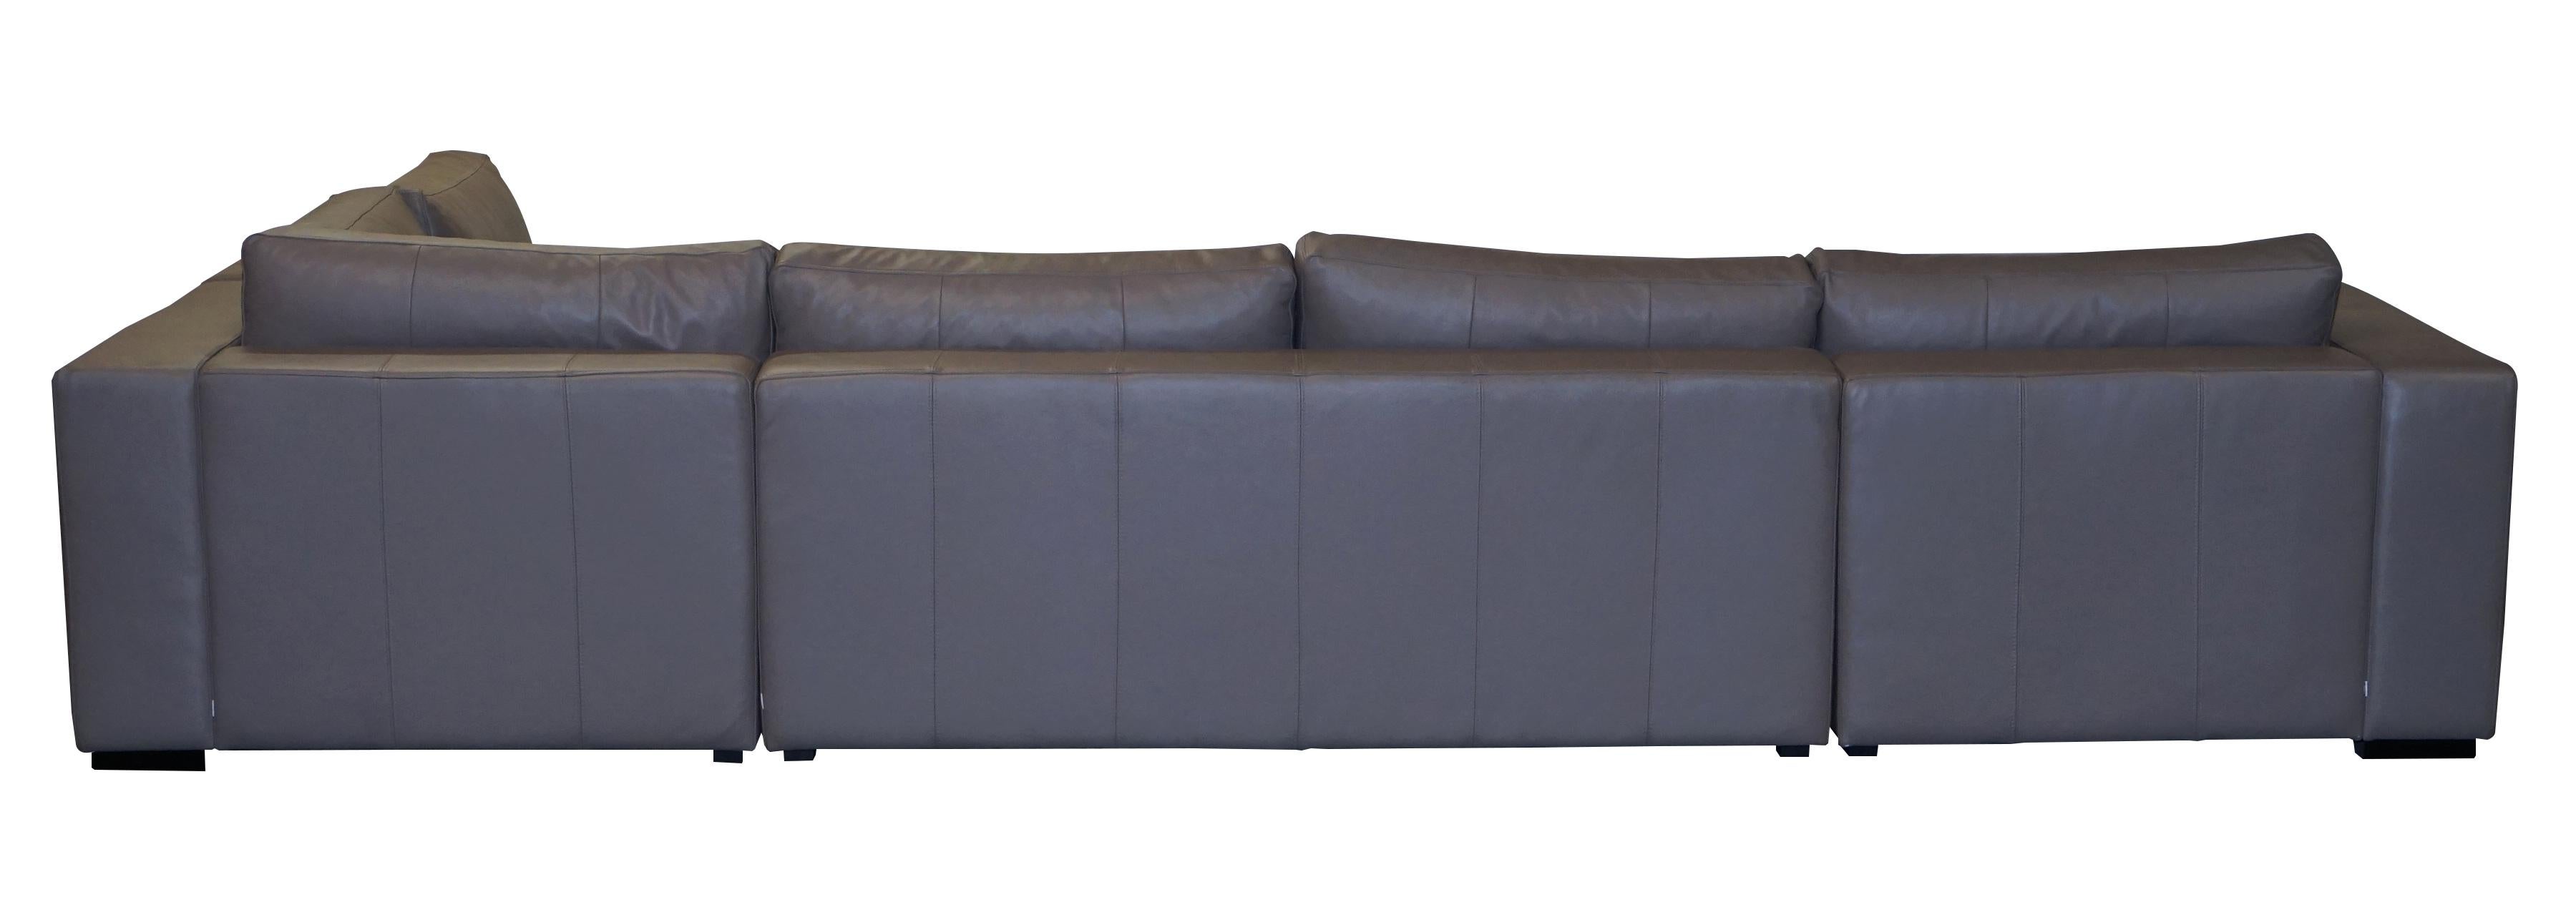 Sublime Bo Concepts Cenova Grey Leather Corner Sofa Chaise Seats 5-6 For Sale 9